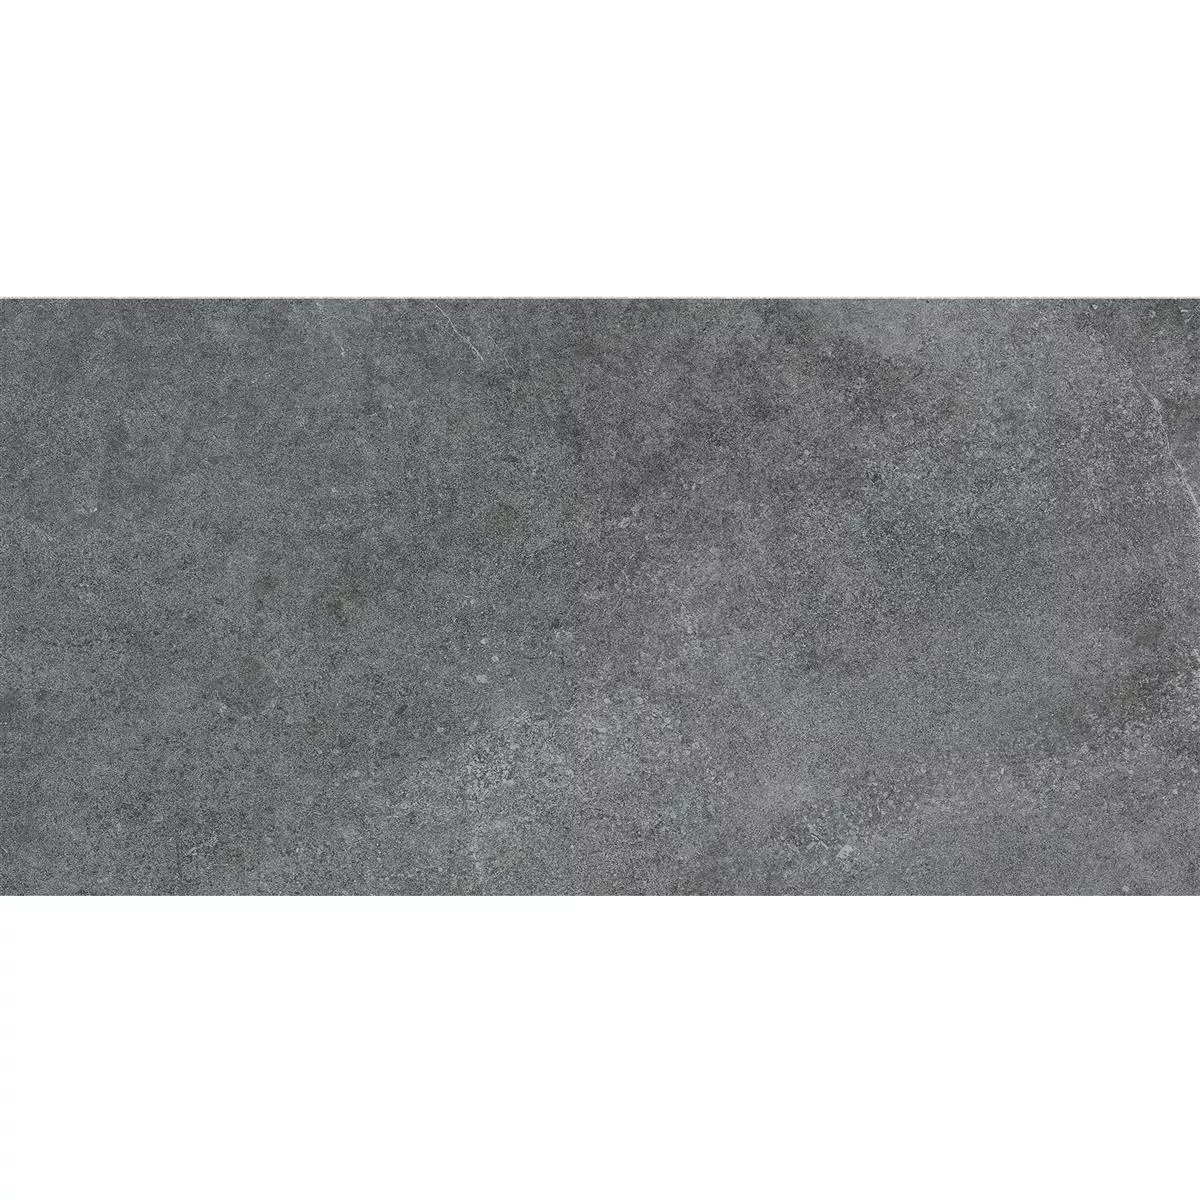 Podlahové Dlaždice Montana Neglazovaný Antracitová 30x60cm / R10B